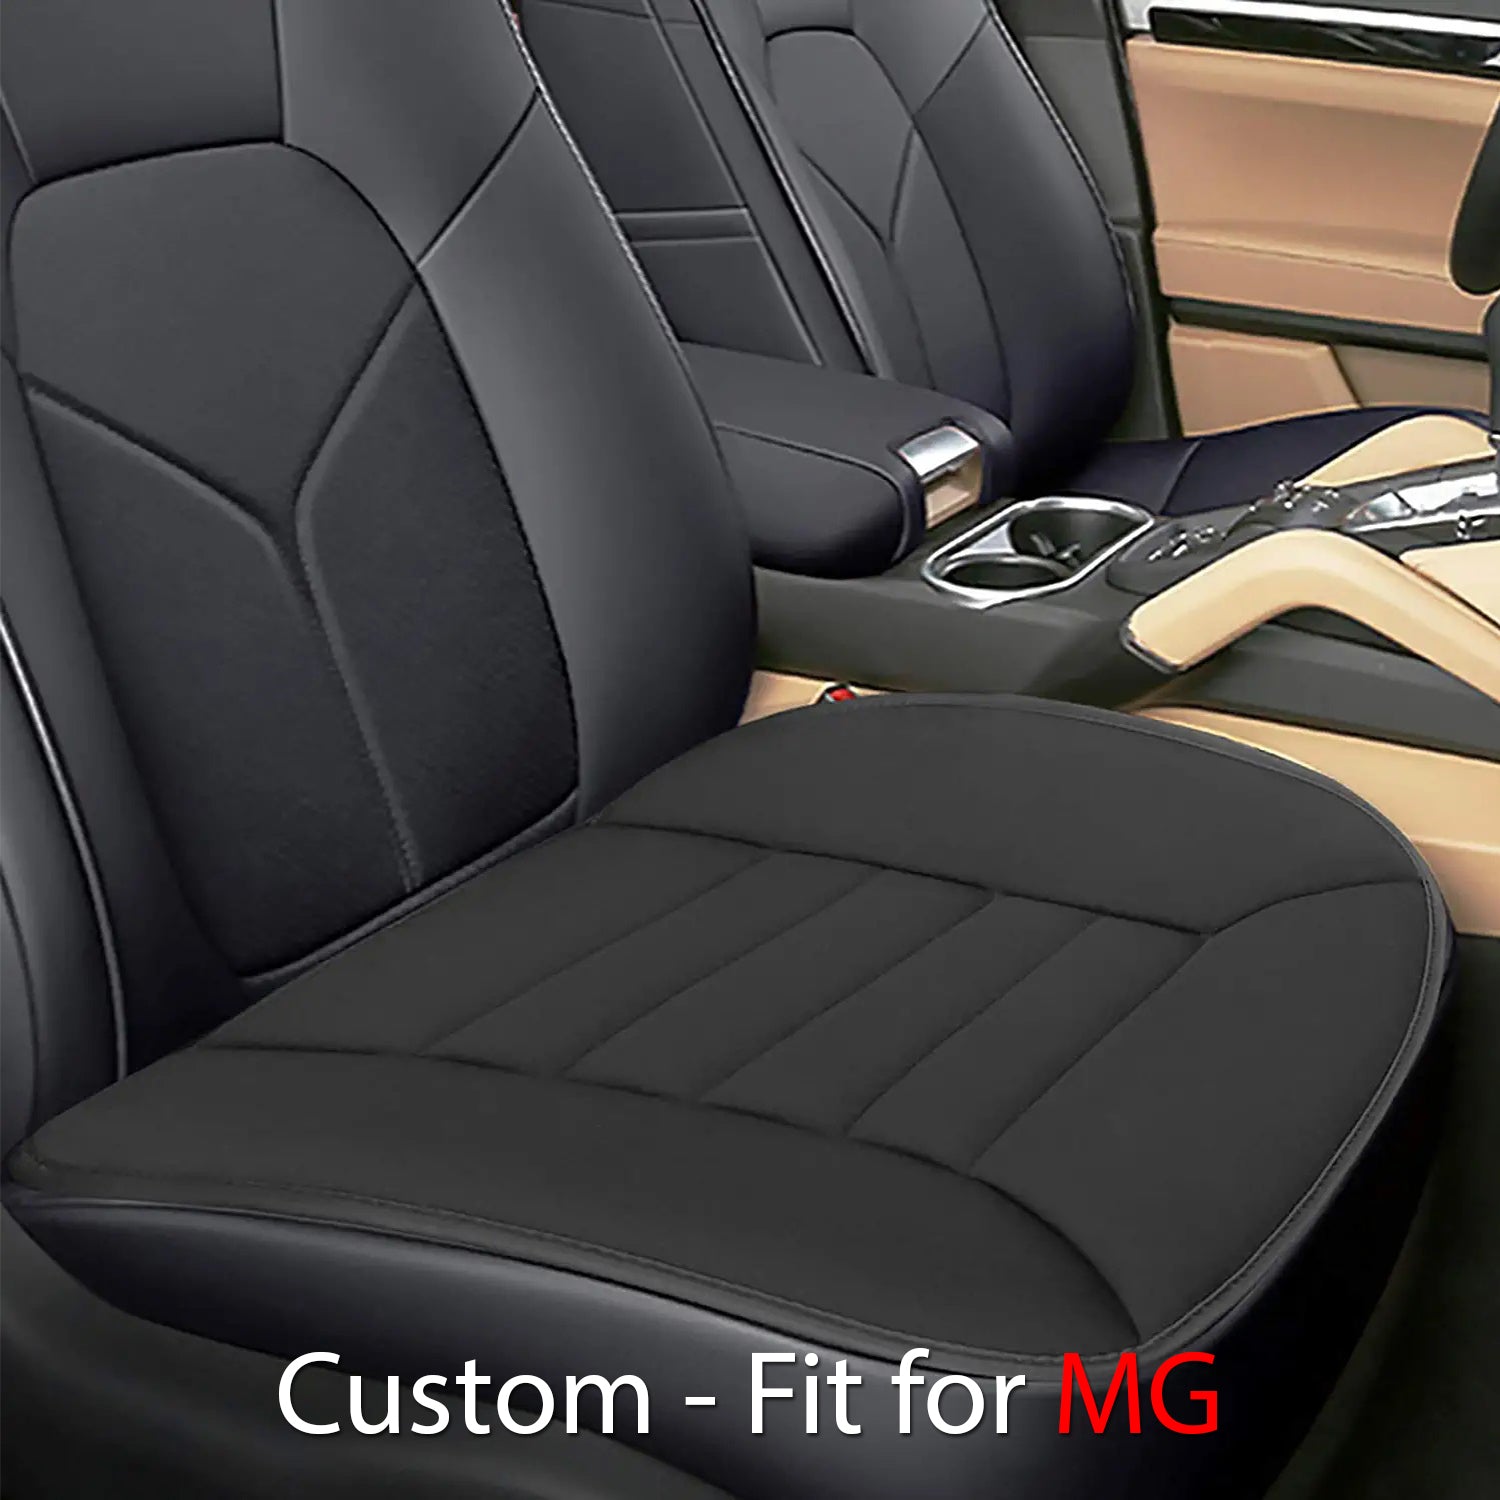 Car Seat Cushion with 1.2inch Comfort Memory Foam, Custom-Fit For Car, Seat Cushion for Car and Office Chair DLMC247